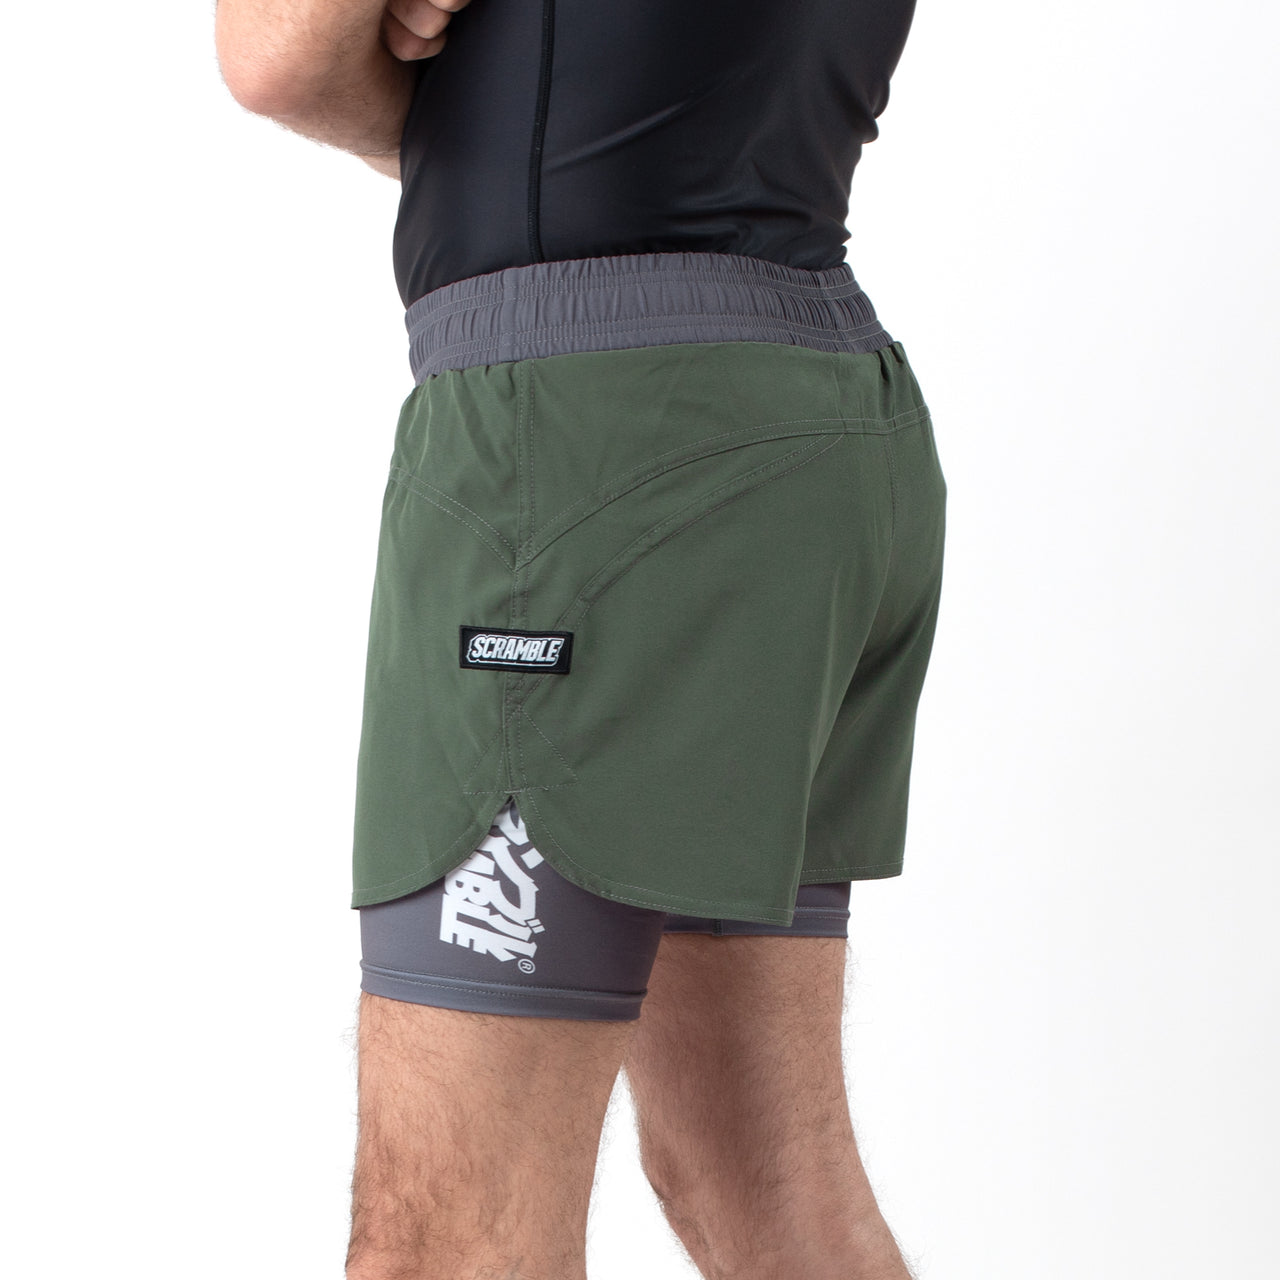 Scramble Combination Shorts - Green/Grey